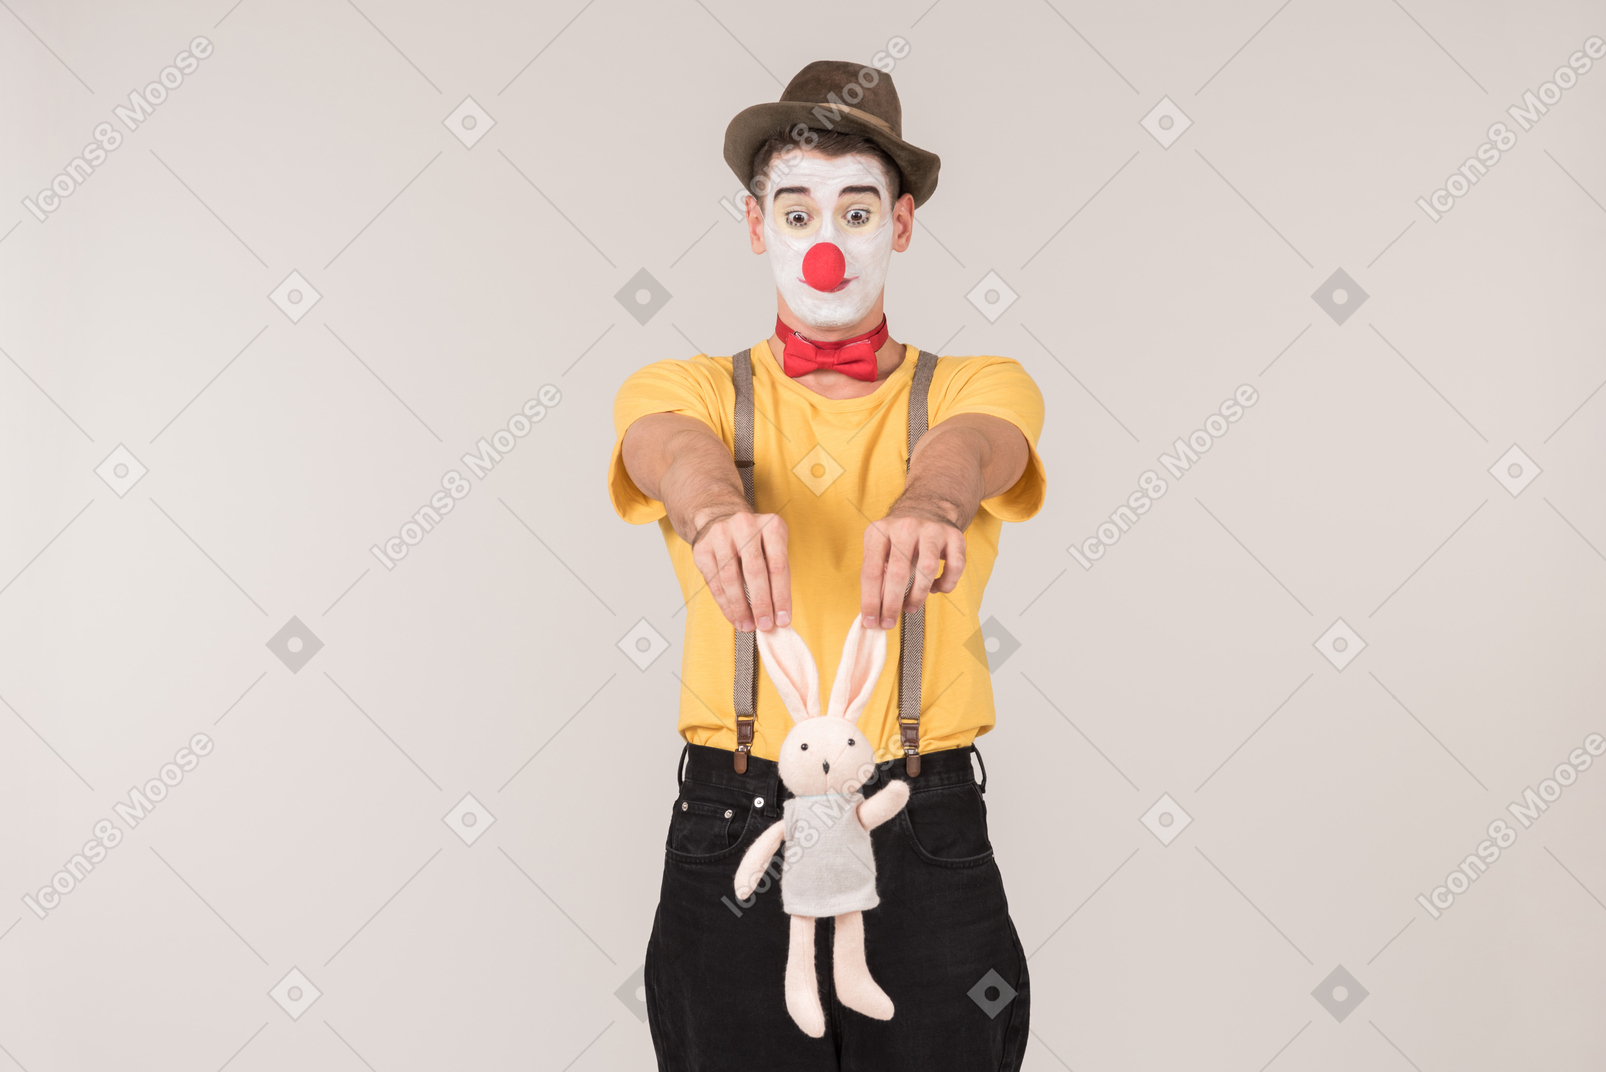 Male clown holding toy rabbit